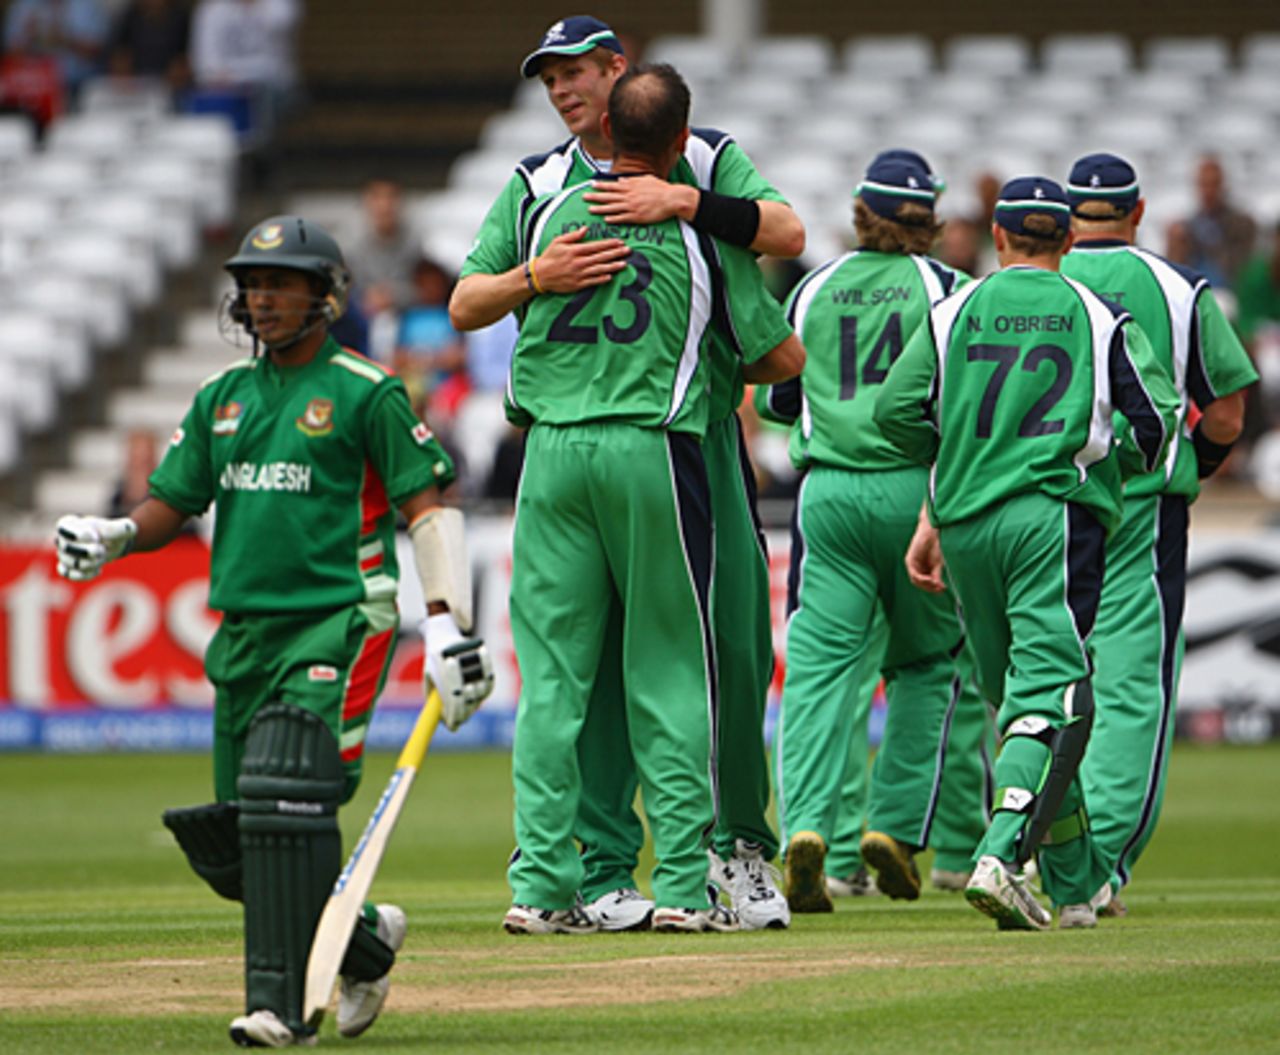 Trent Johnston gets the congratulations after dismissing Mohammad Ashraful, Bangladesh v Ireland, ICC World Twenty20, Trent Bridge, June 8, 2009